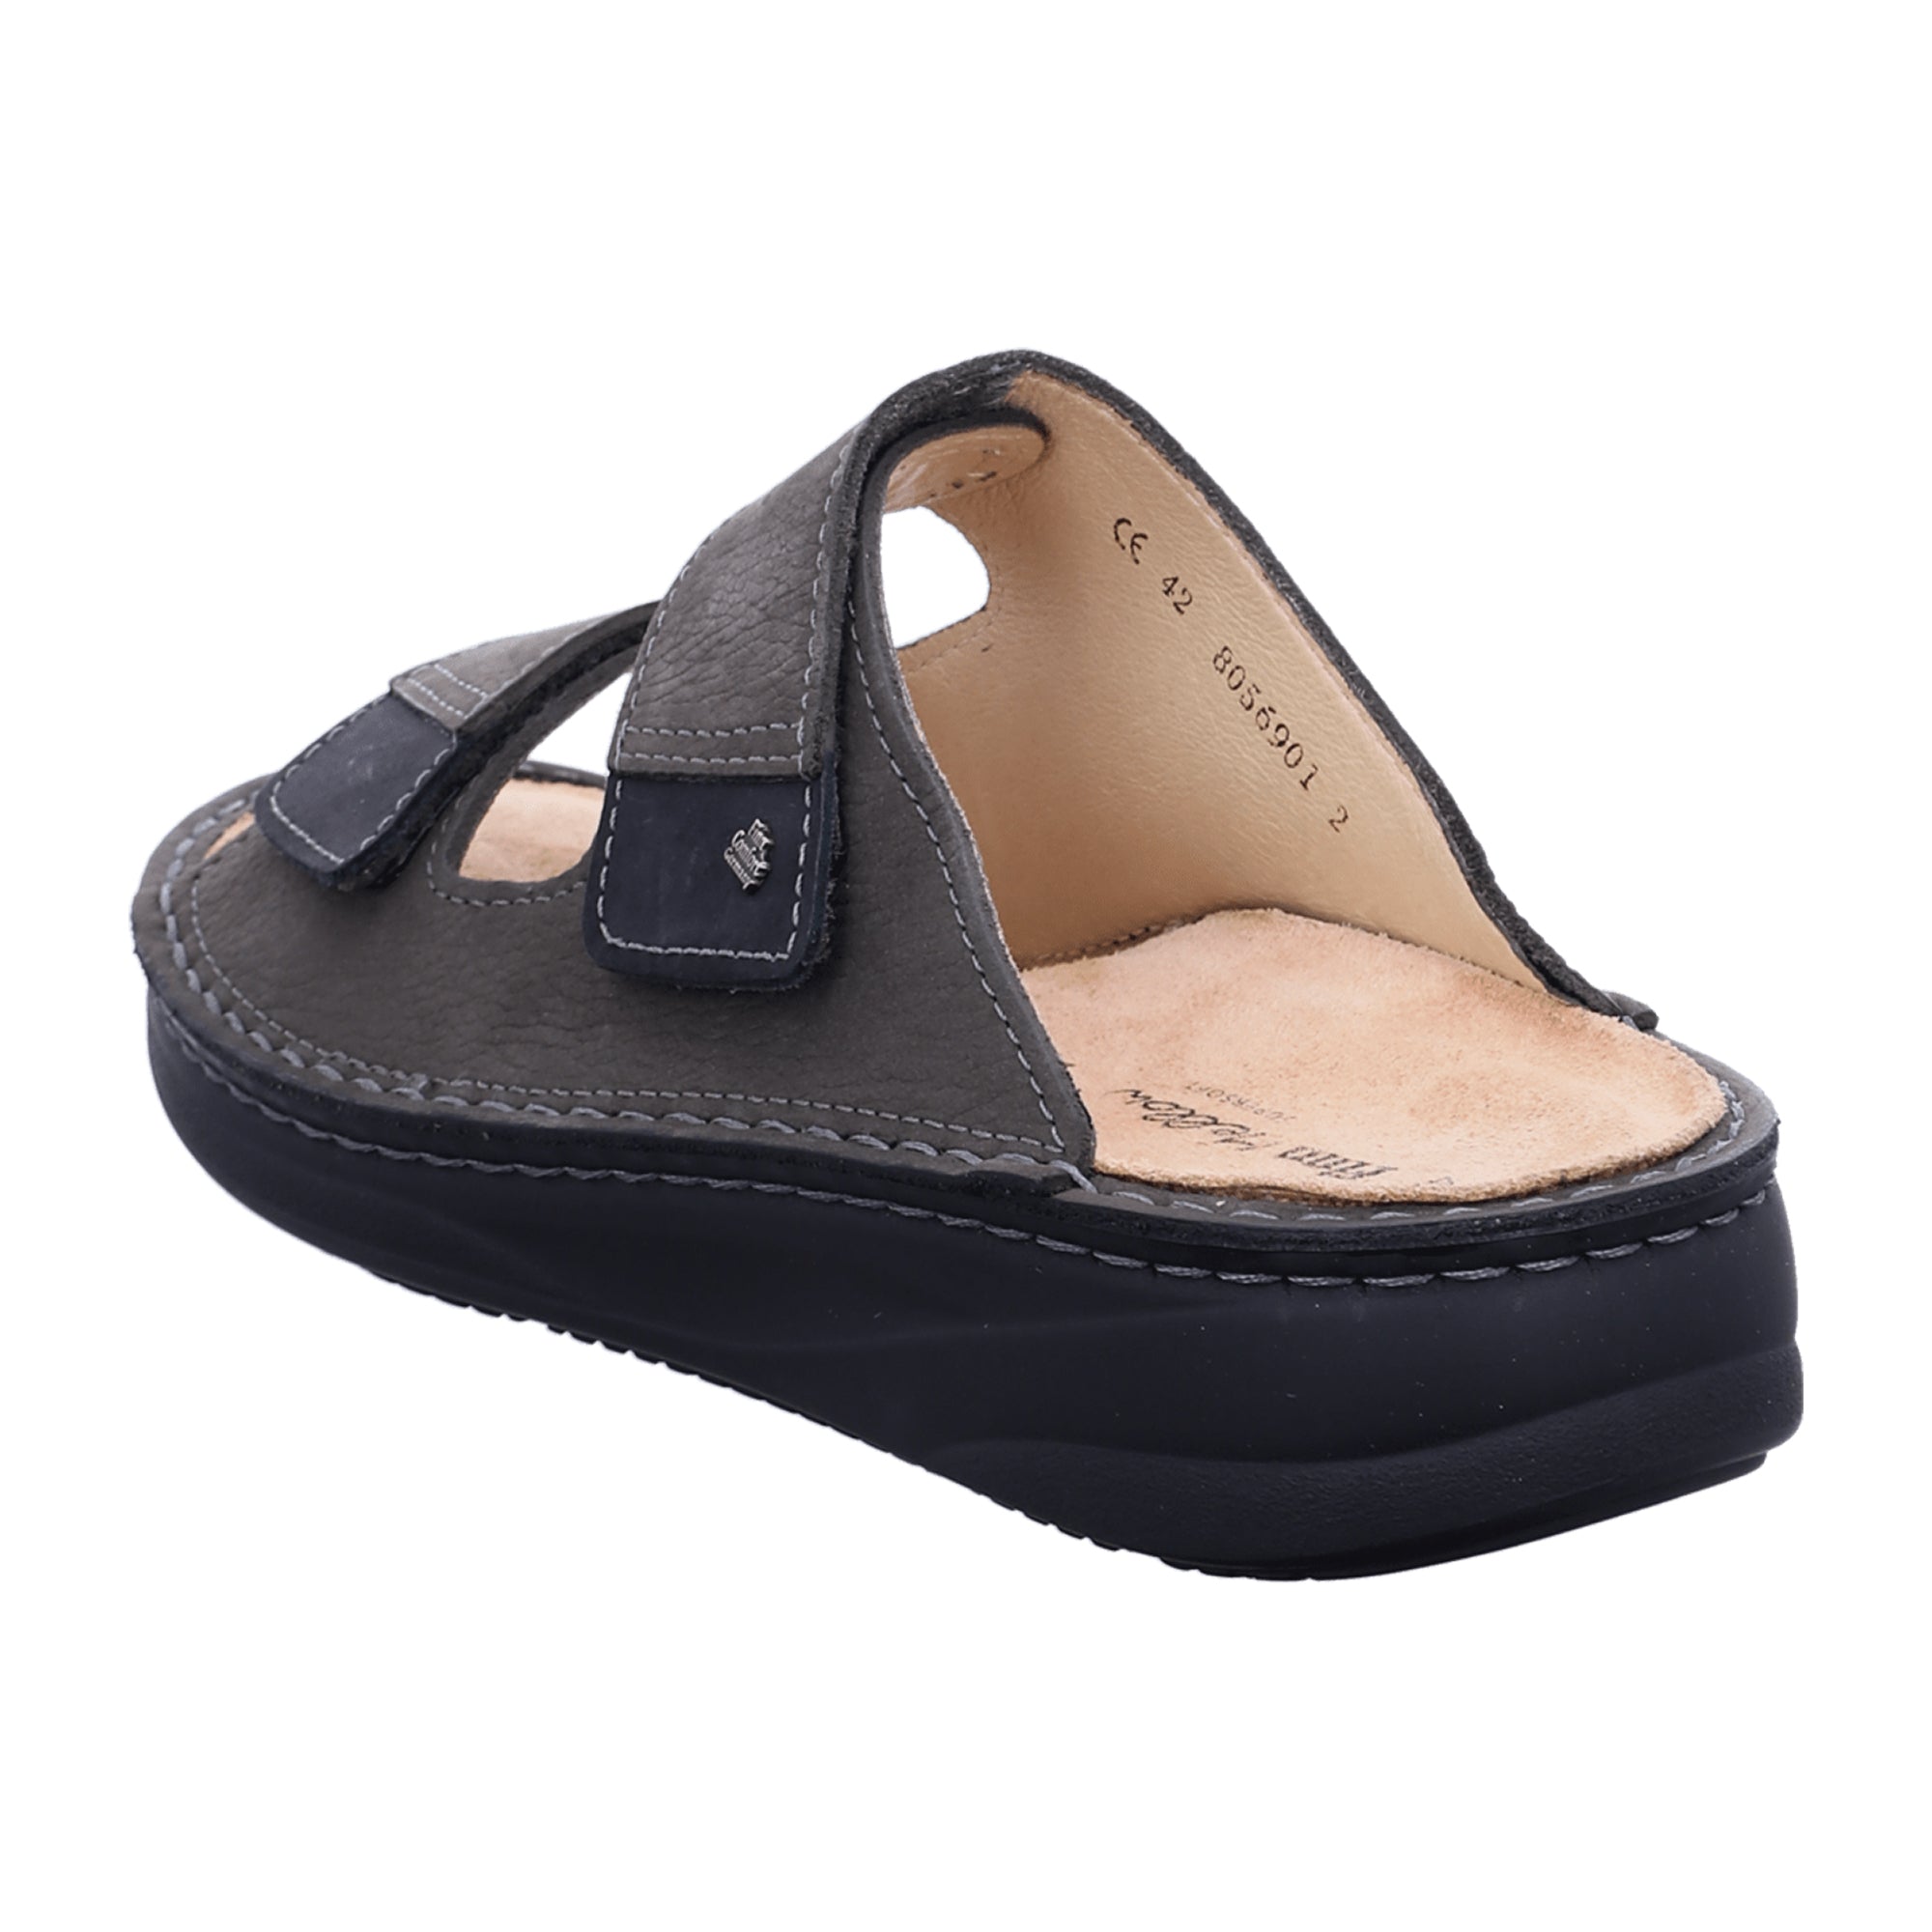 Finn Comfort Psara Men's Slides - Grey/Black Comfort Leather Sandals